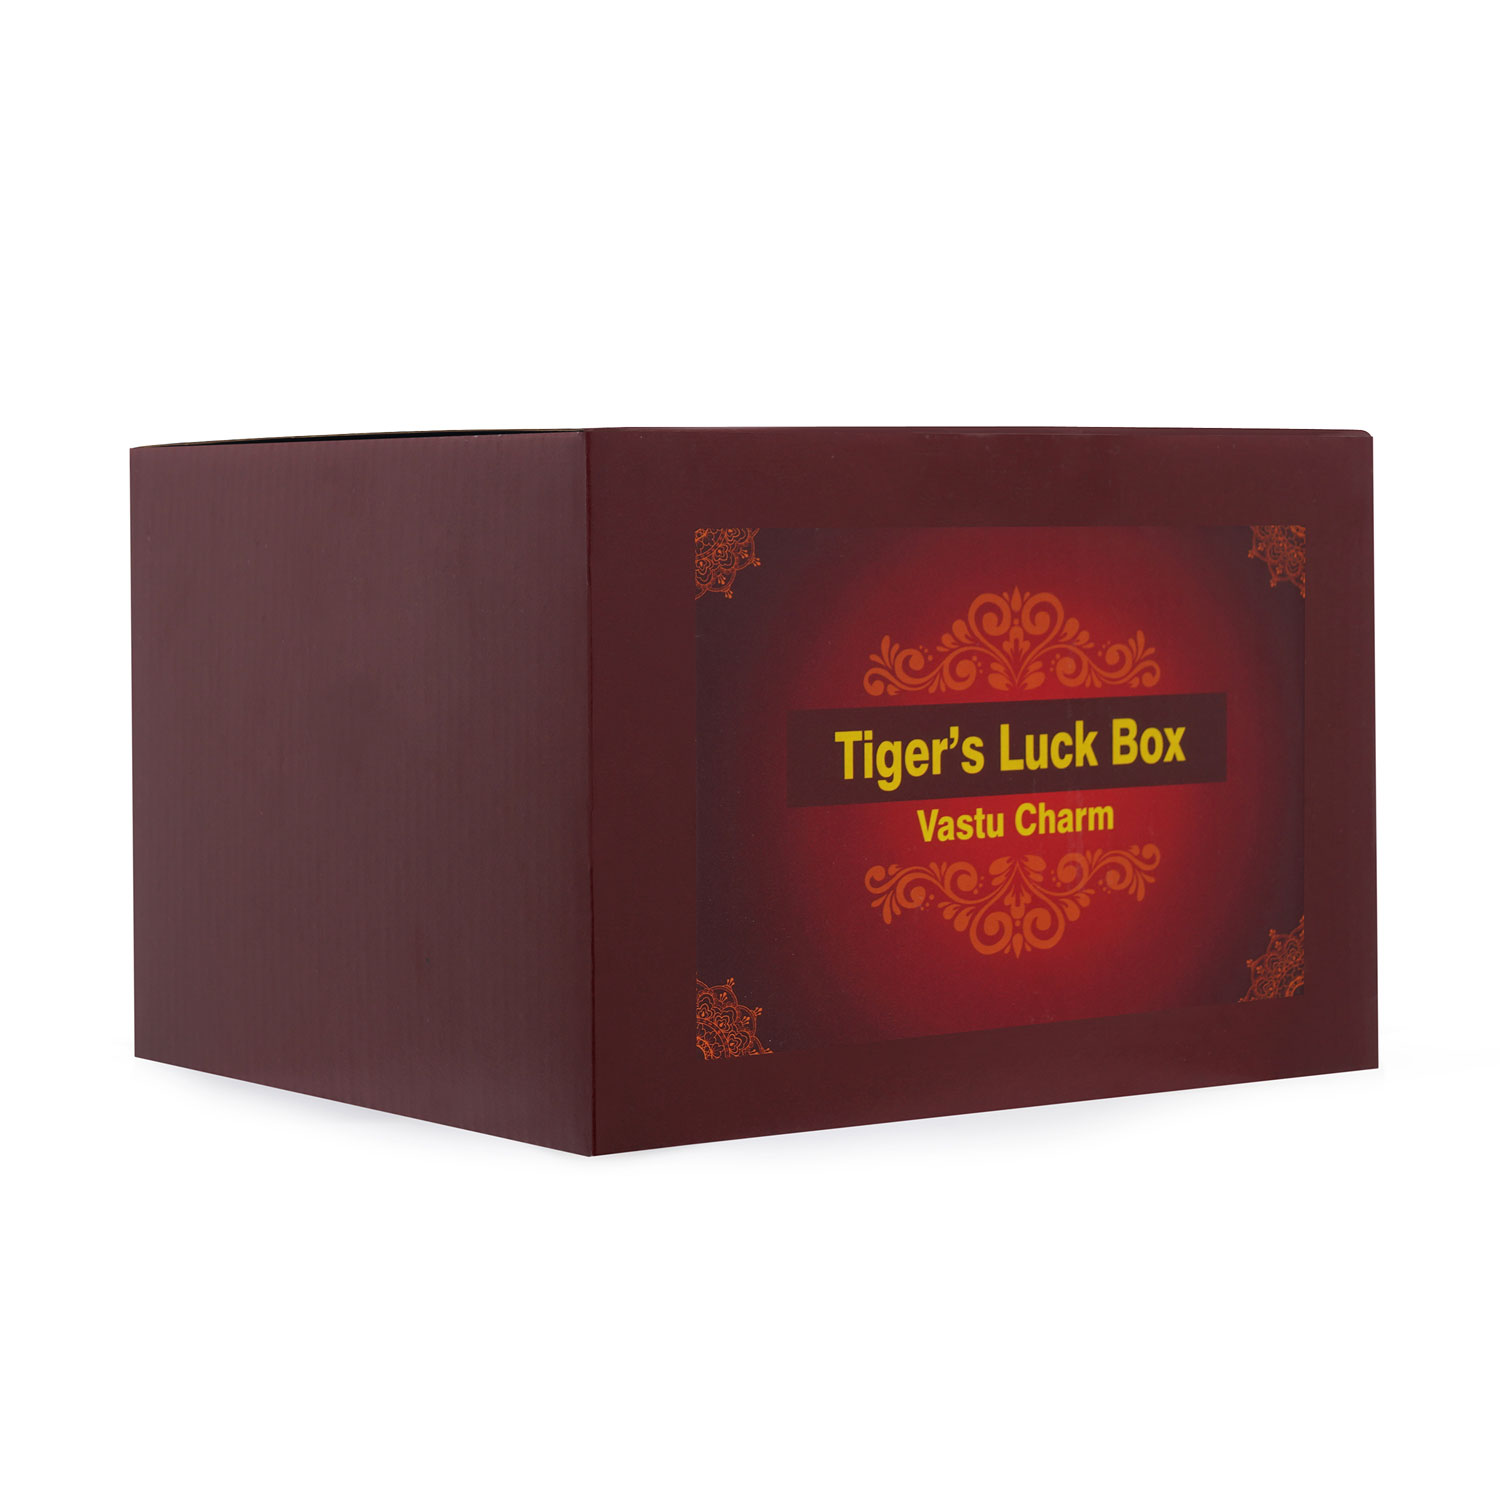 TIGER’S LUCK BOX